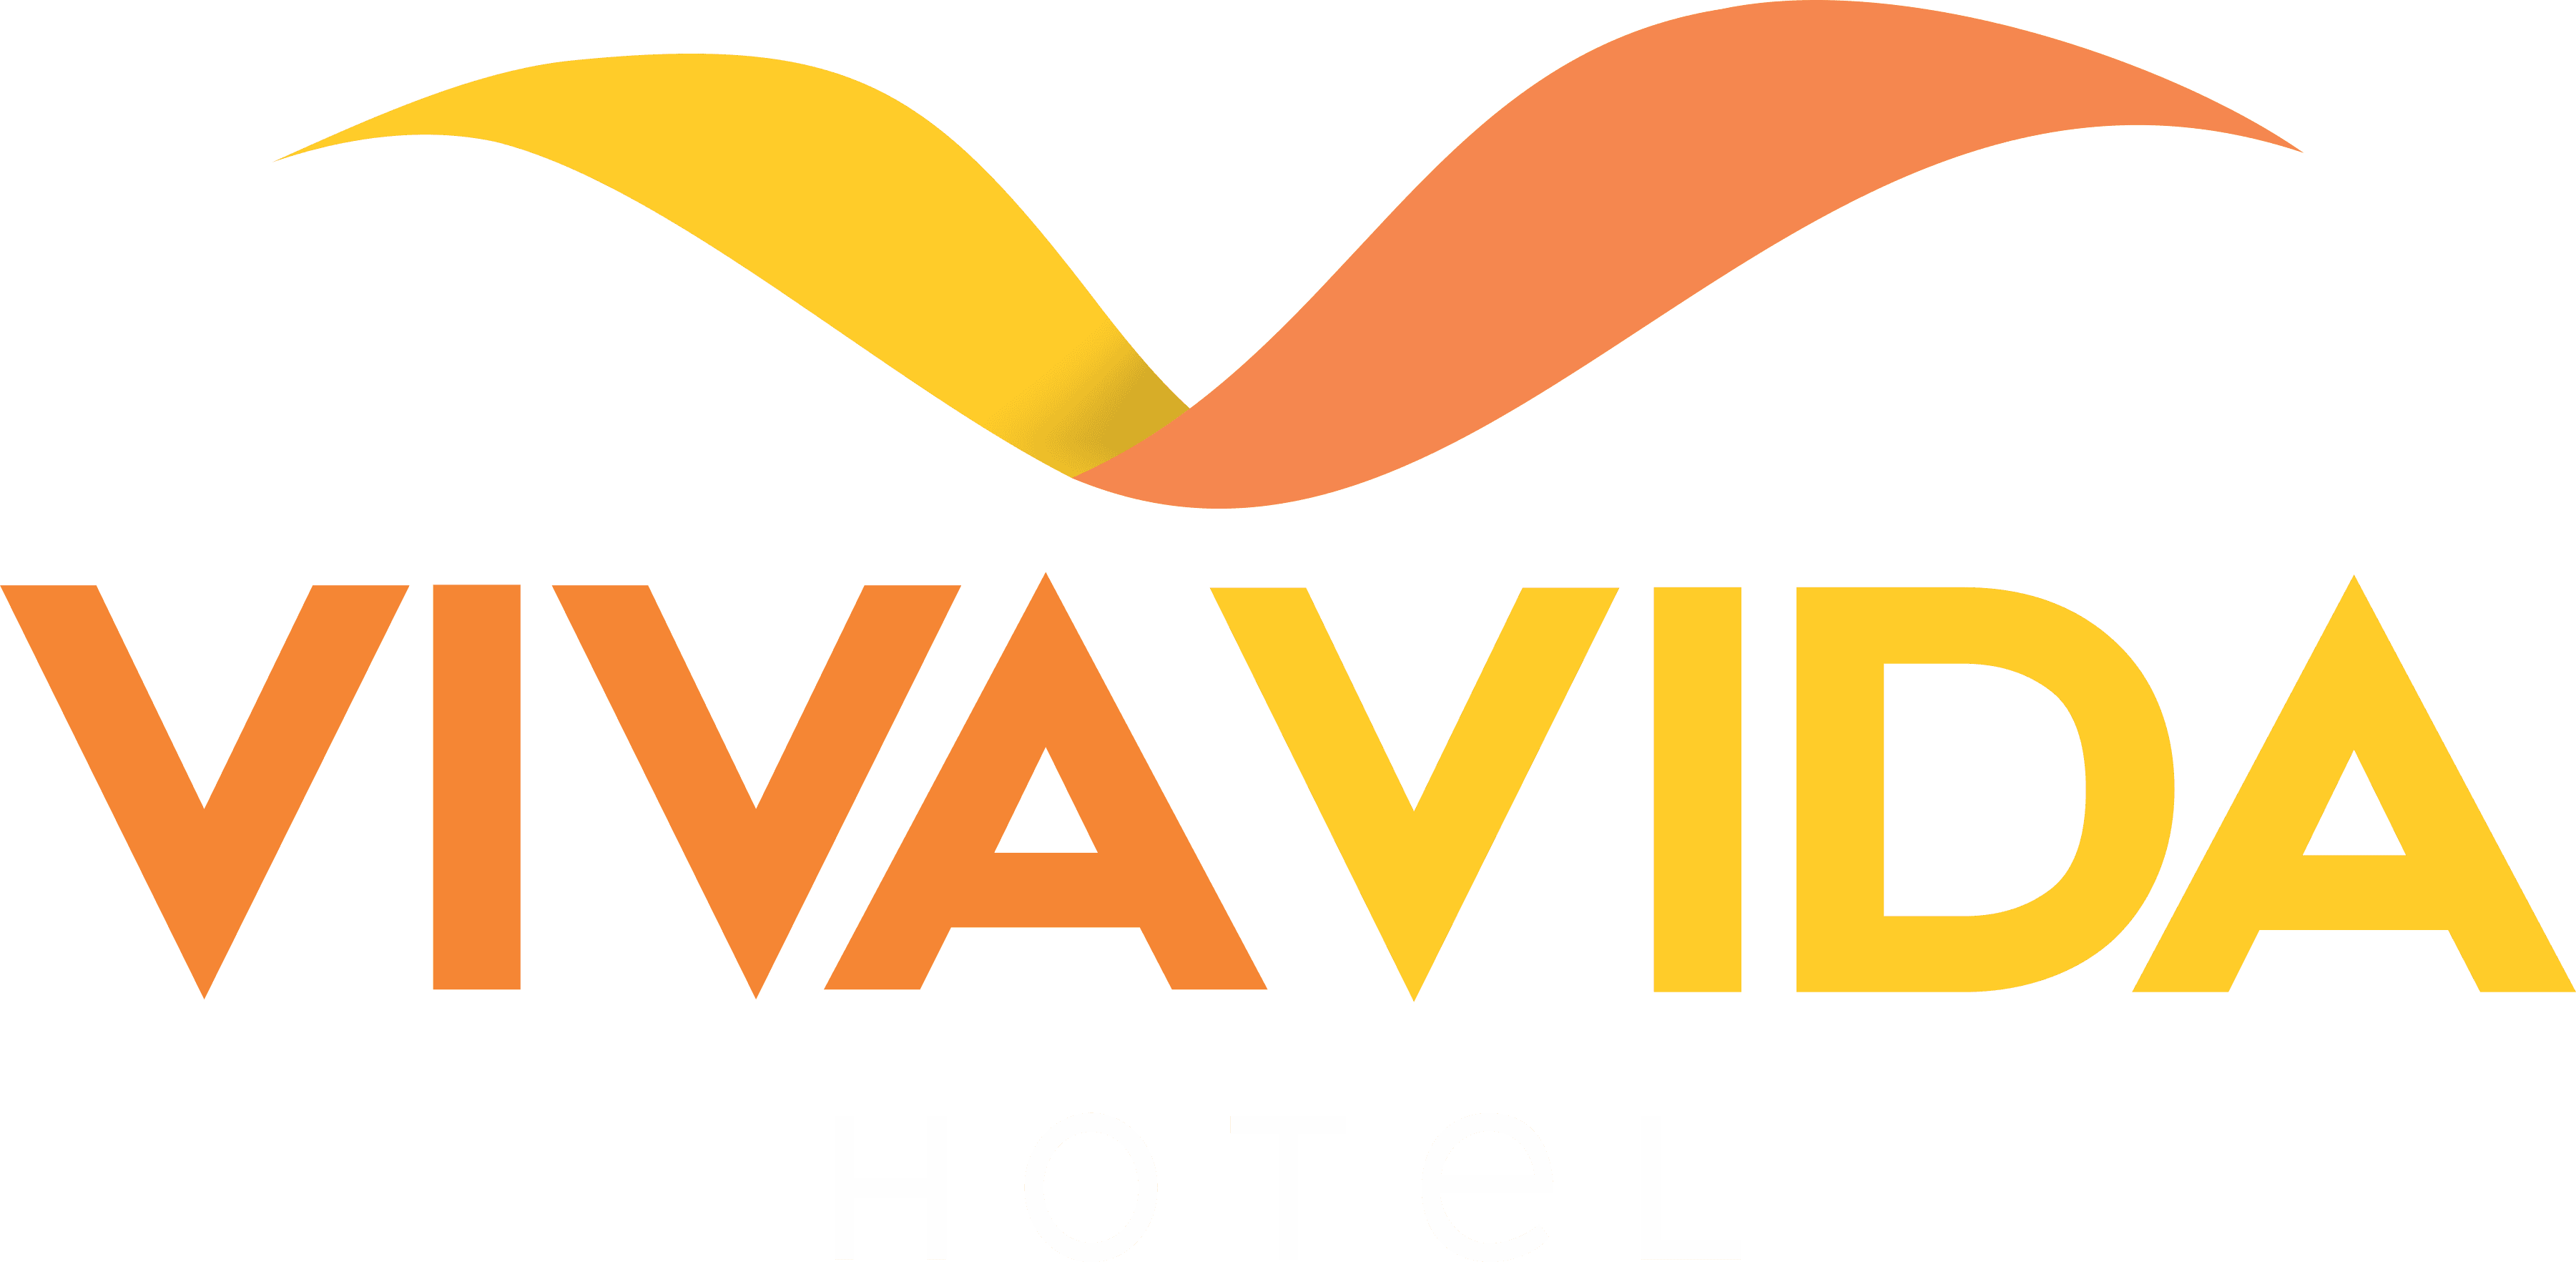 Viva Vida Hotel